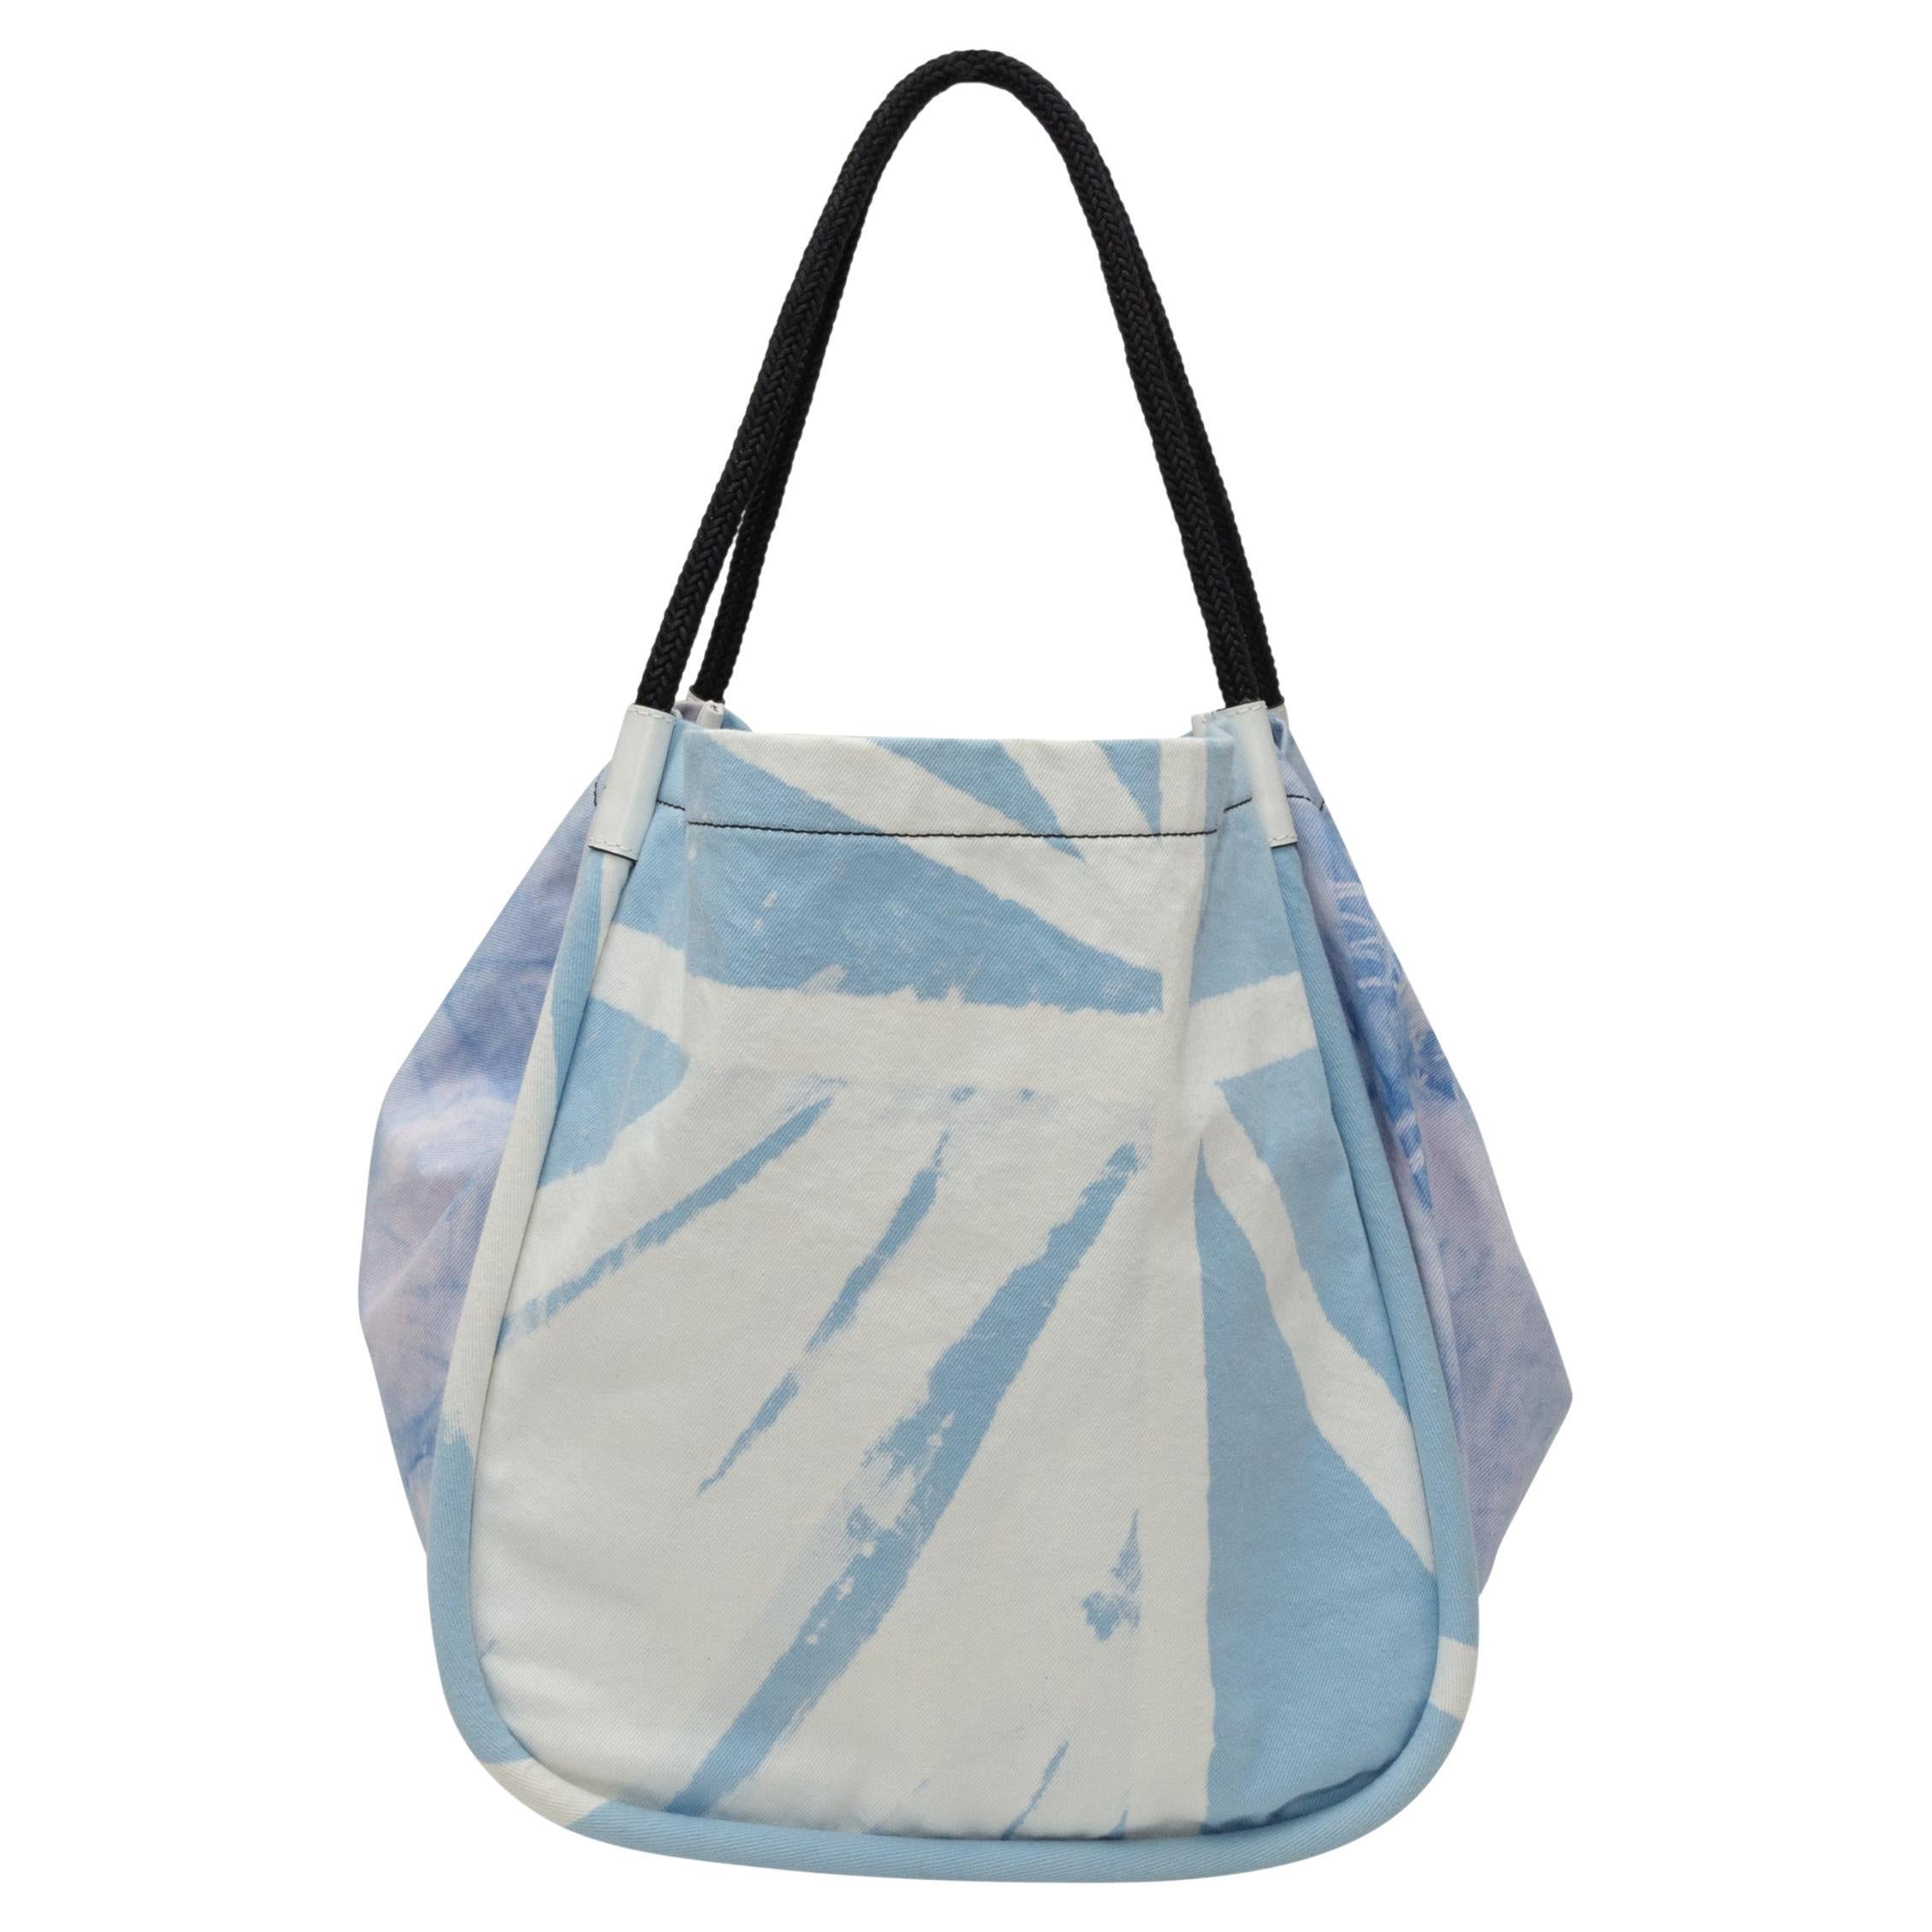 Proenza Schouler Light Blue & White Tie-Dye Tote Bag